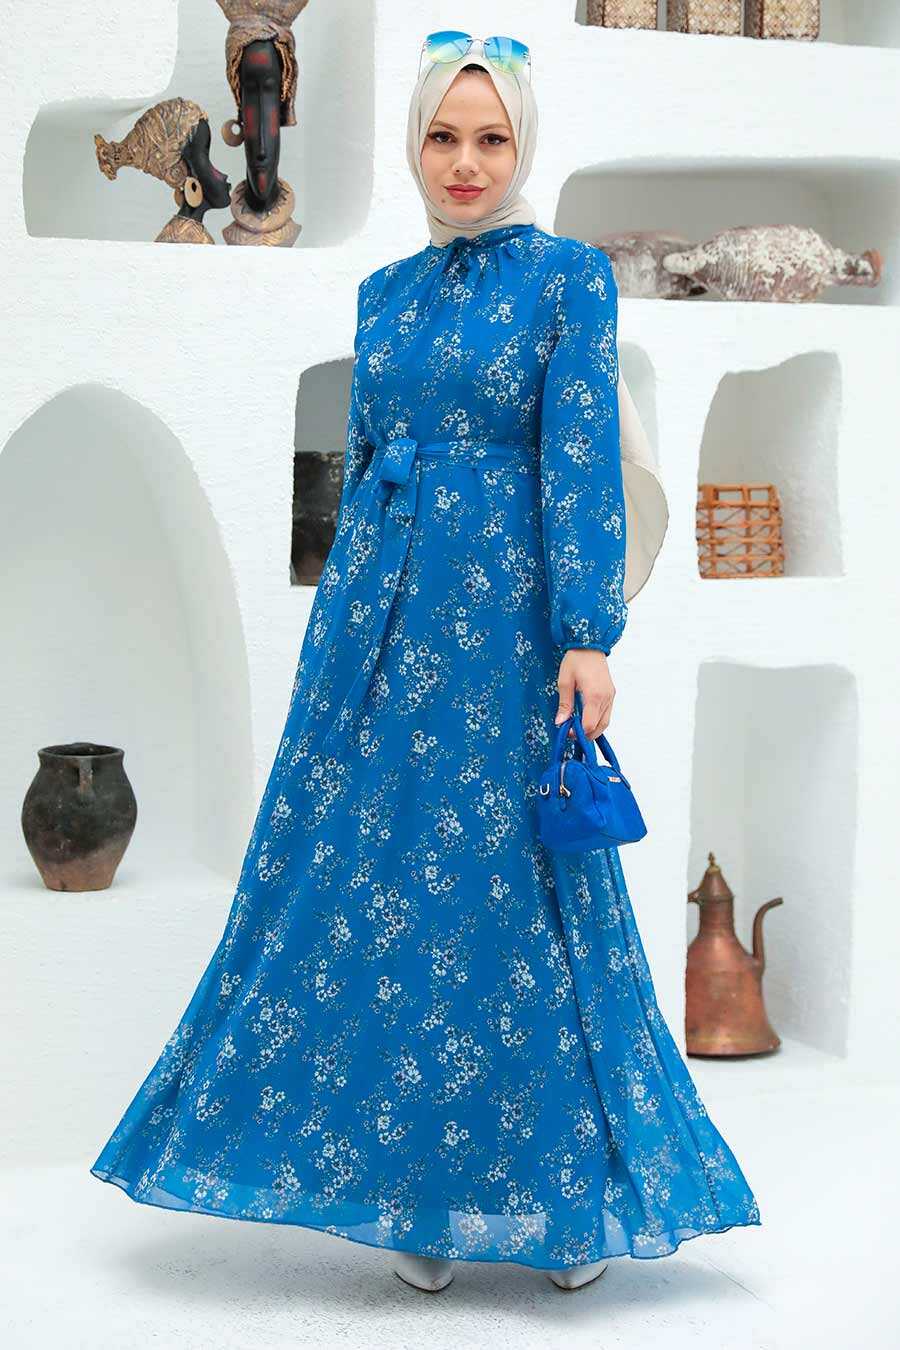 İndigo Blue Hijab Dress 279047IM - Neva-style.com